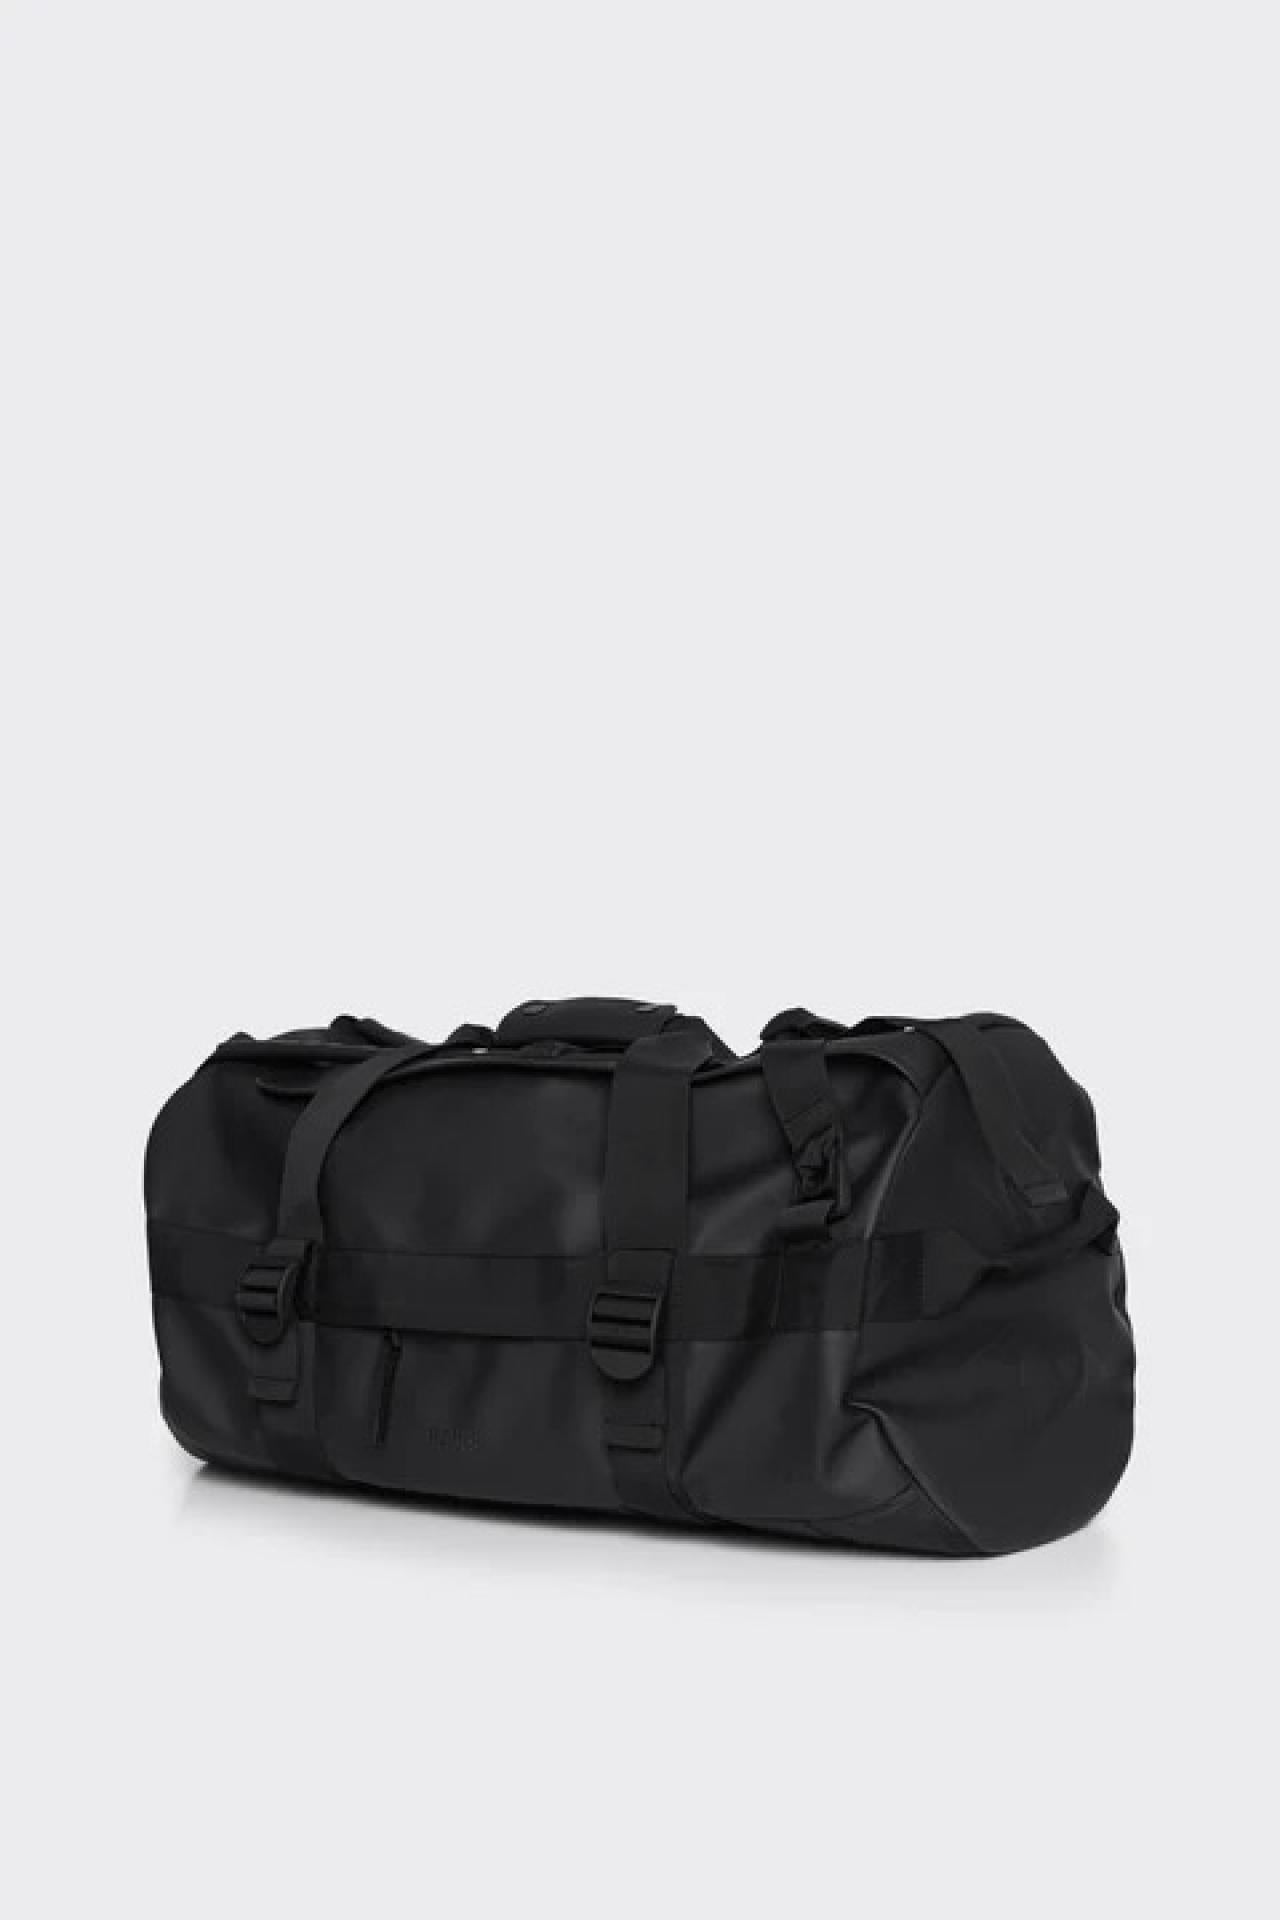 Rains Sporttasche Duffel Bag 13370-01 Black Black